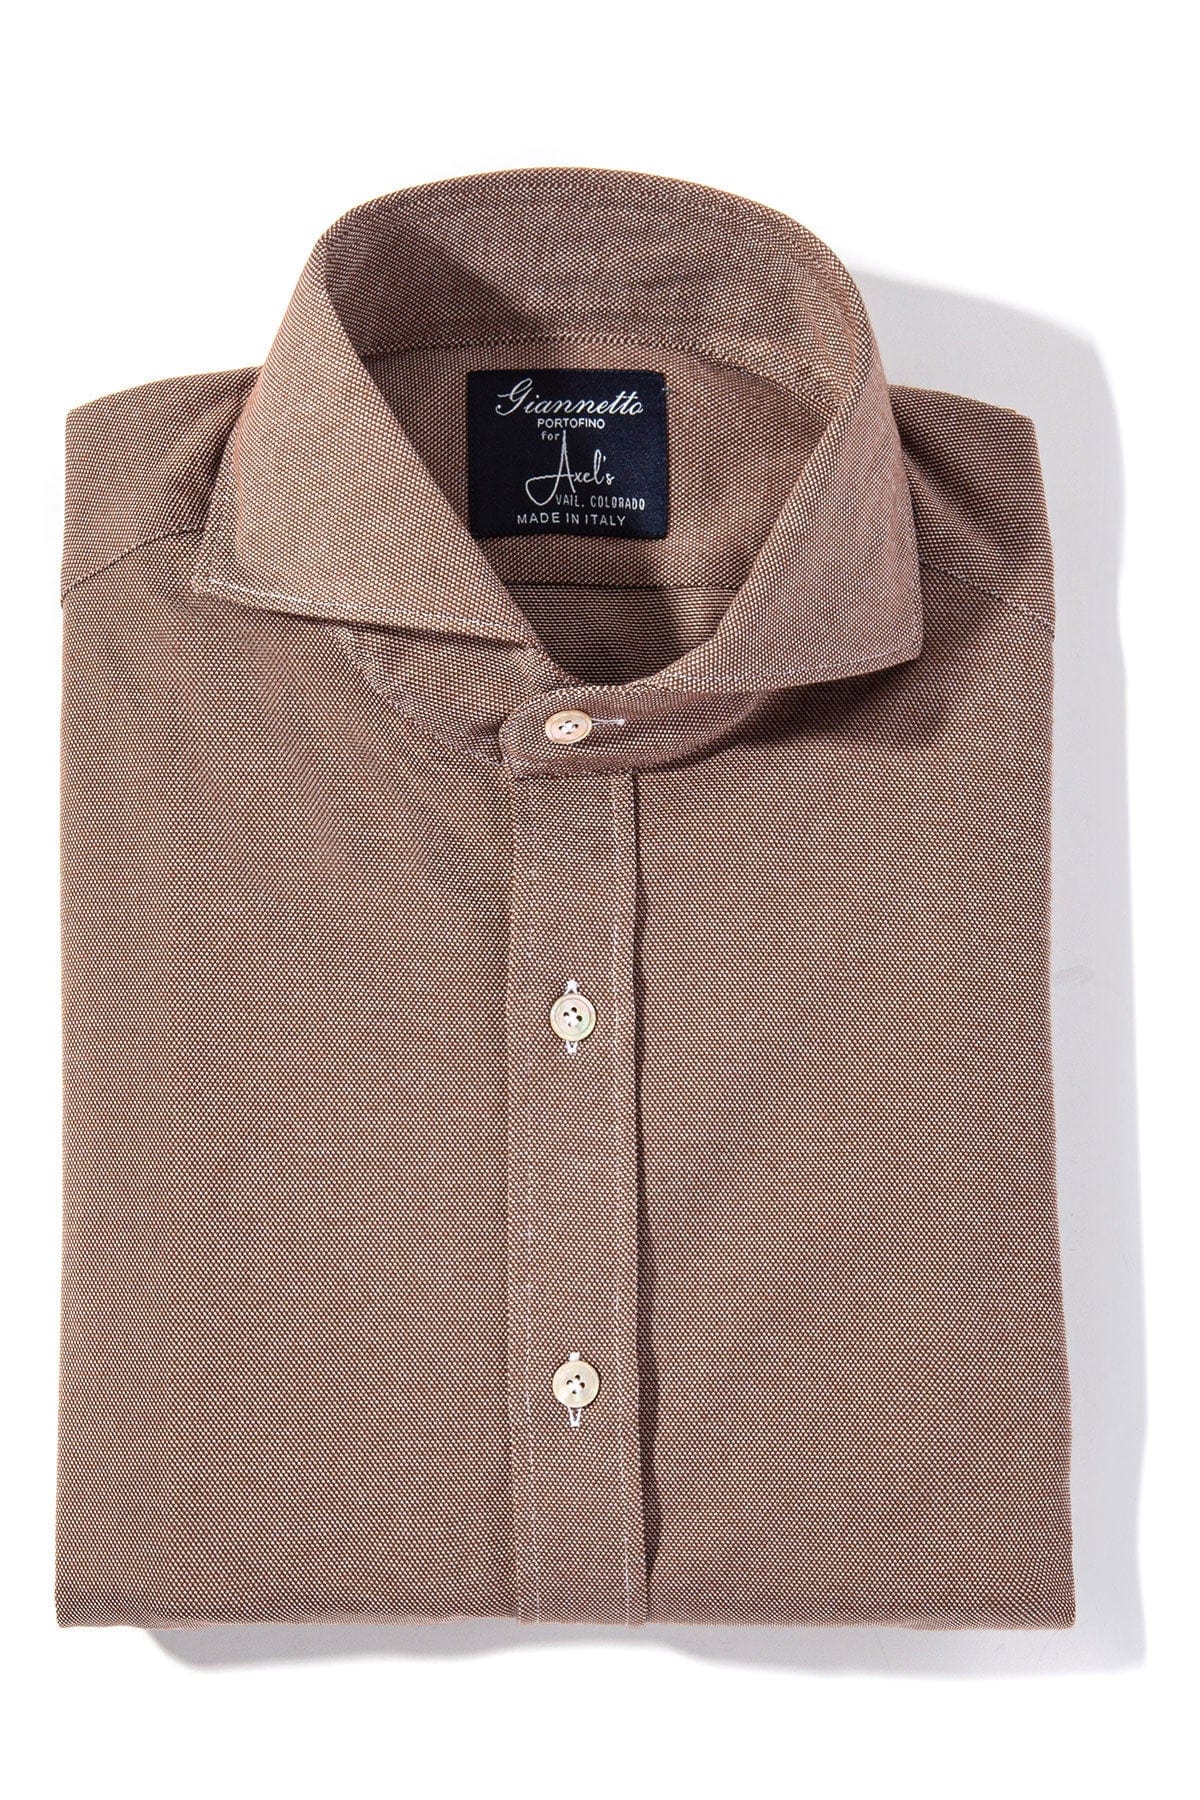 Menerbes Jersey Shirt in Brown - AXEL'S